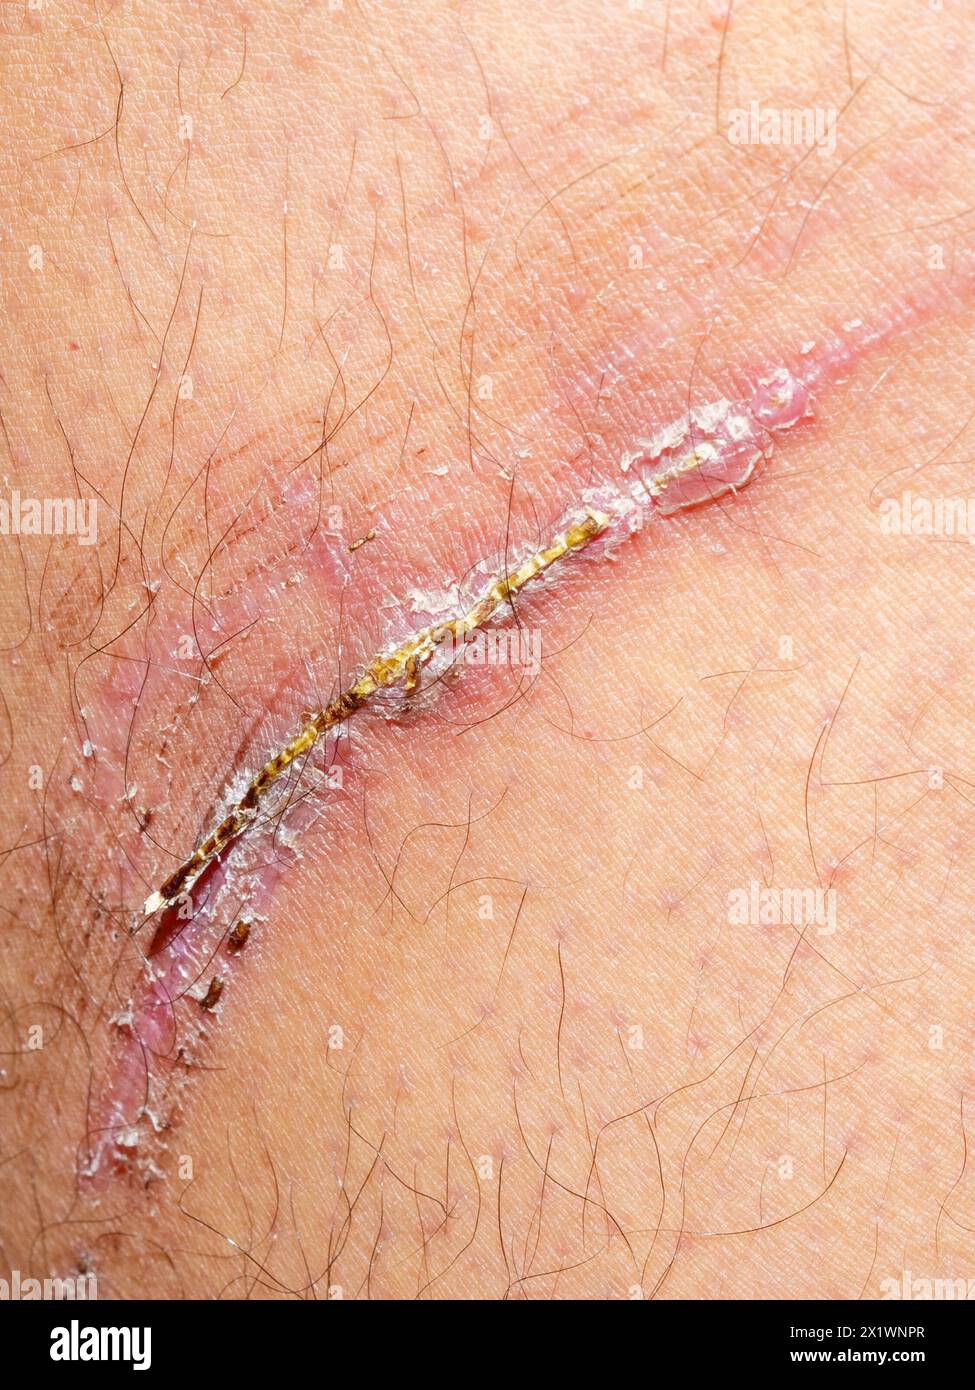 Close up image of injured skin going through its healing process after sustaining damage. Stock Photo